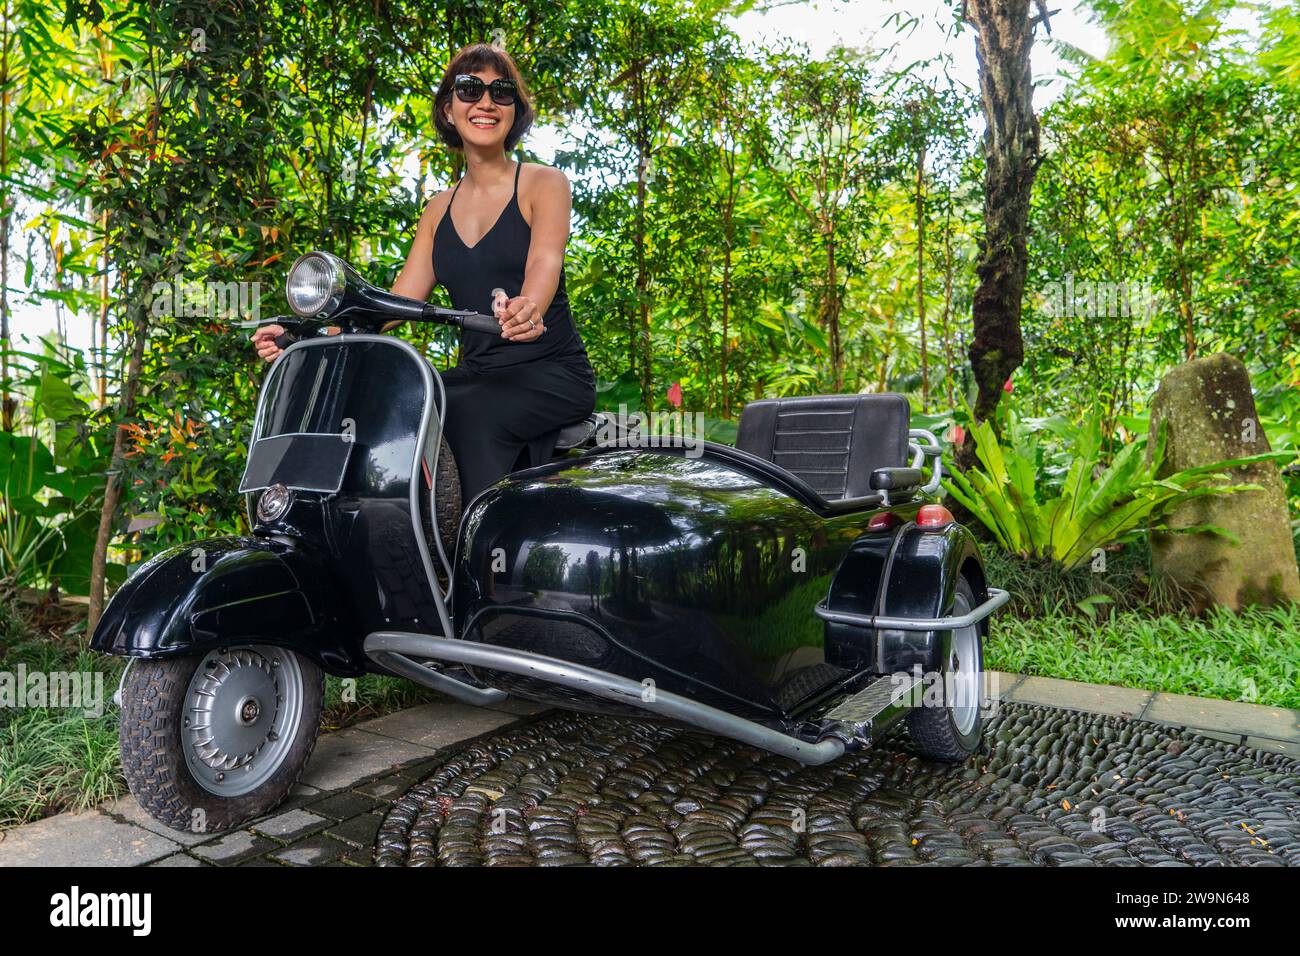 beautiful woman sitting on sidecar scooter Stock Photo